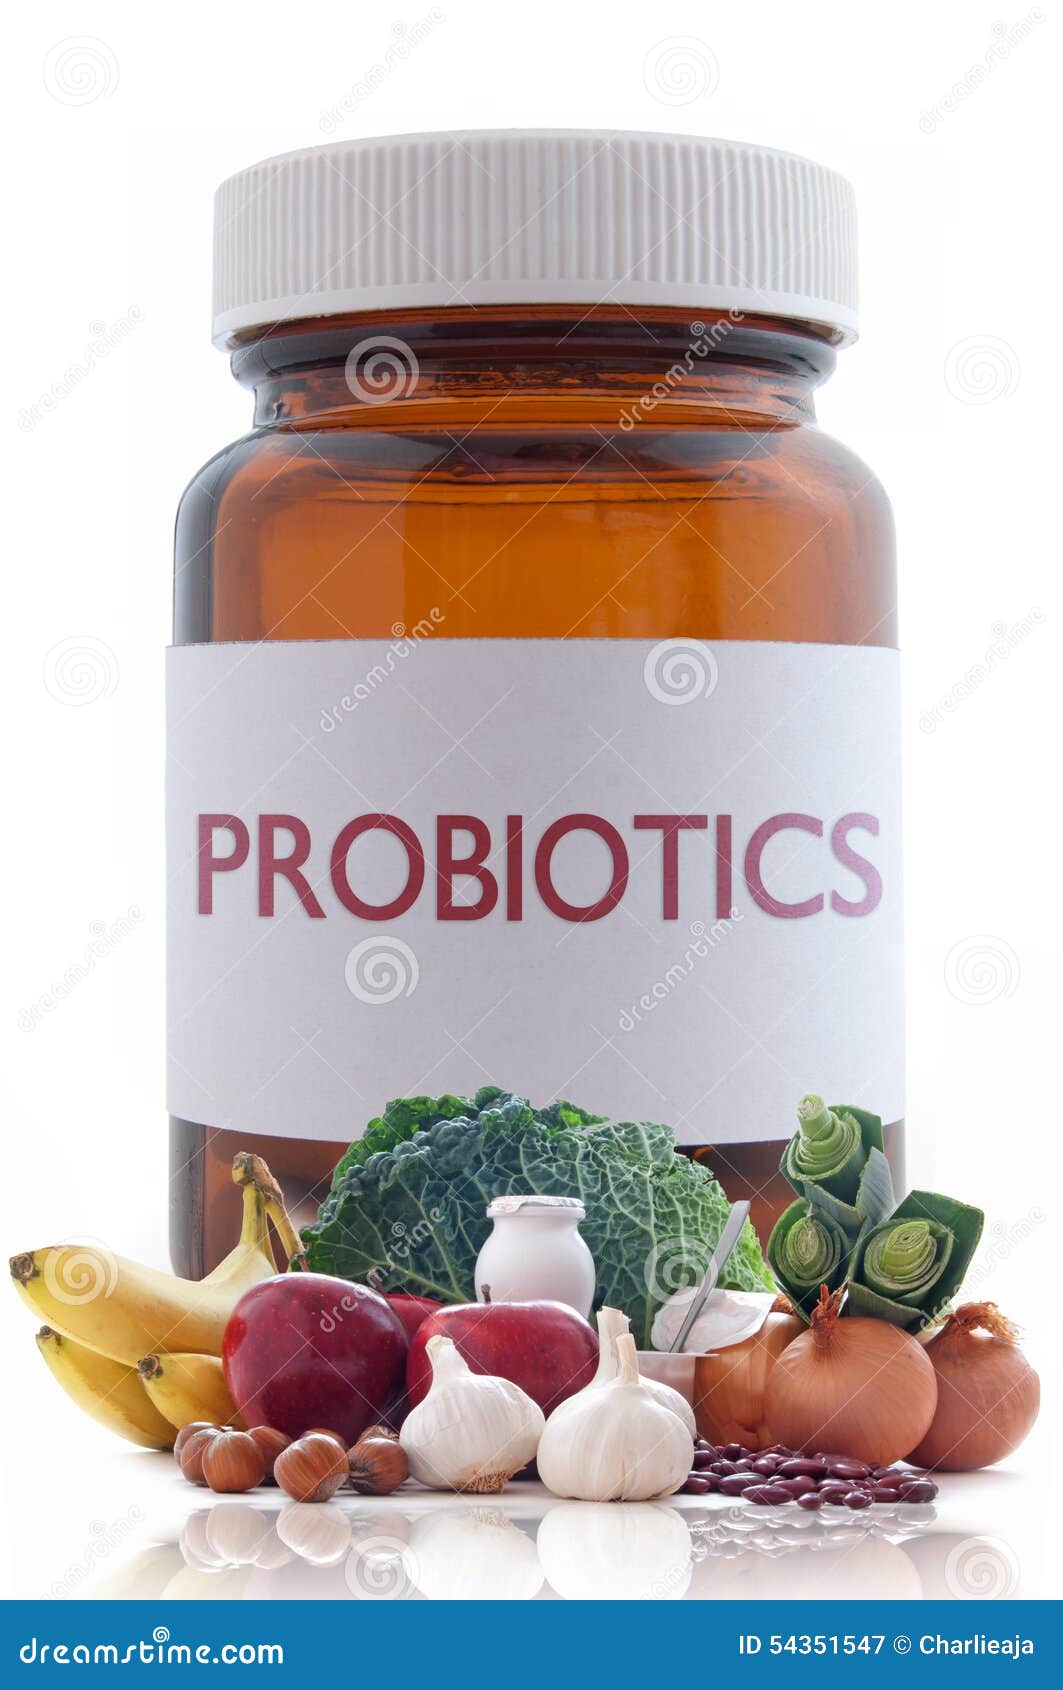 probiotic pills concept